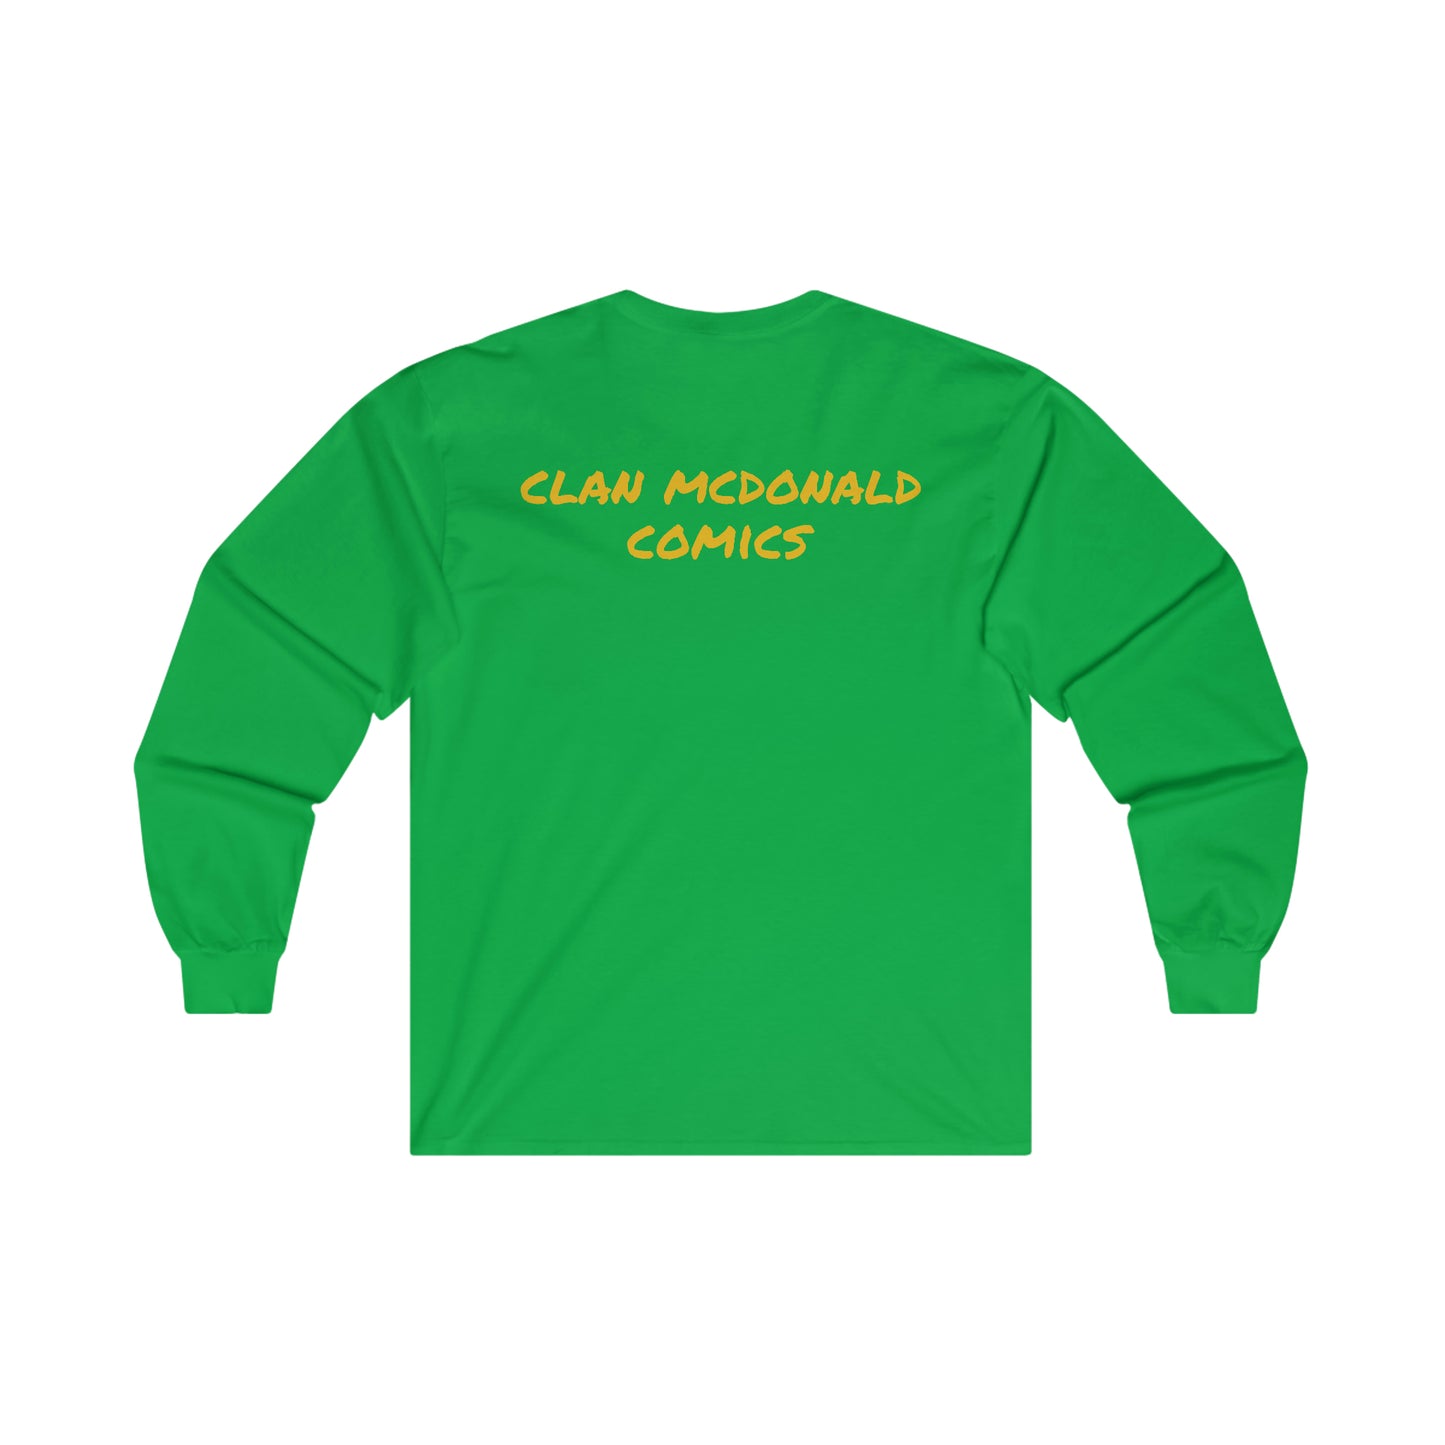 Clan McDonald Comics Long Sleeve Tee